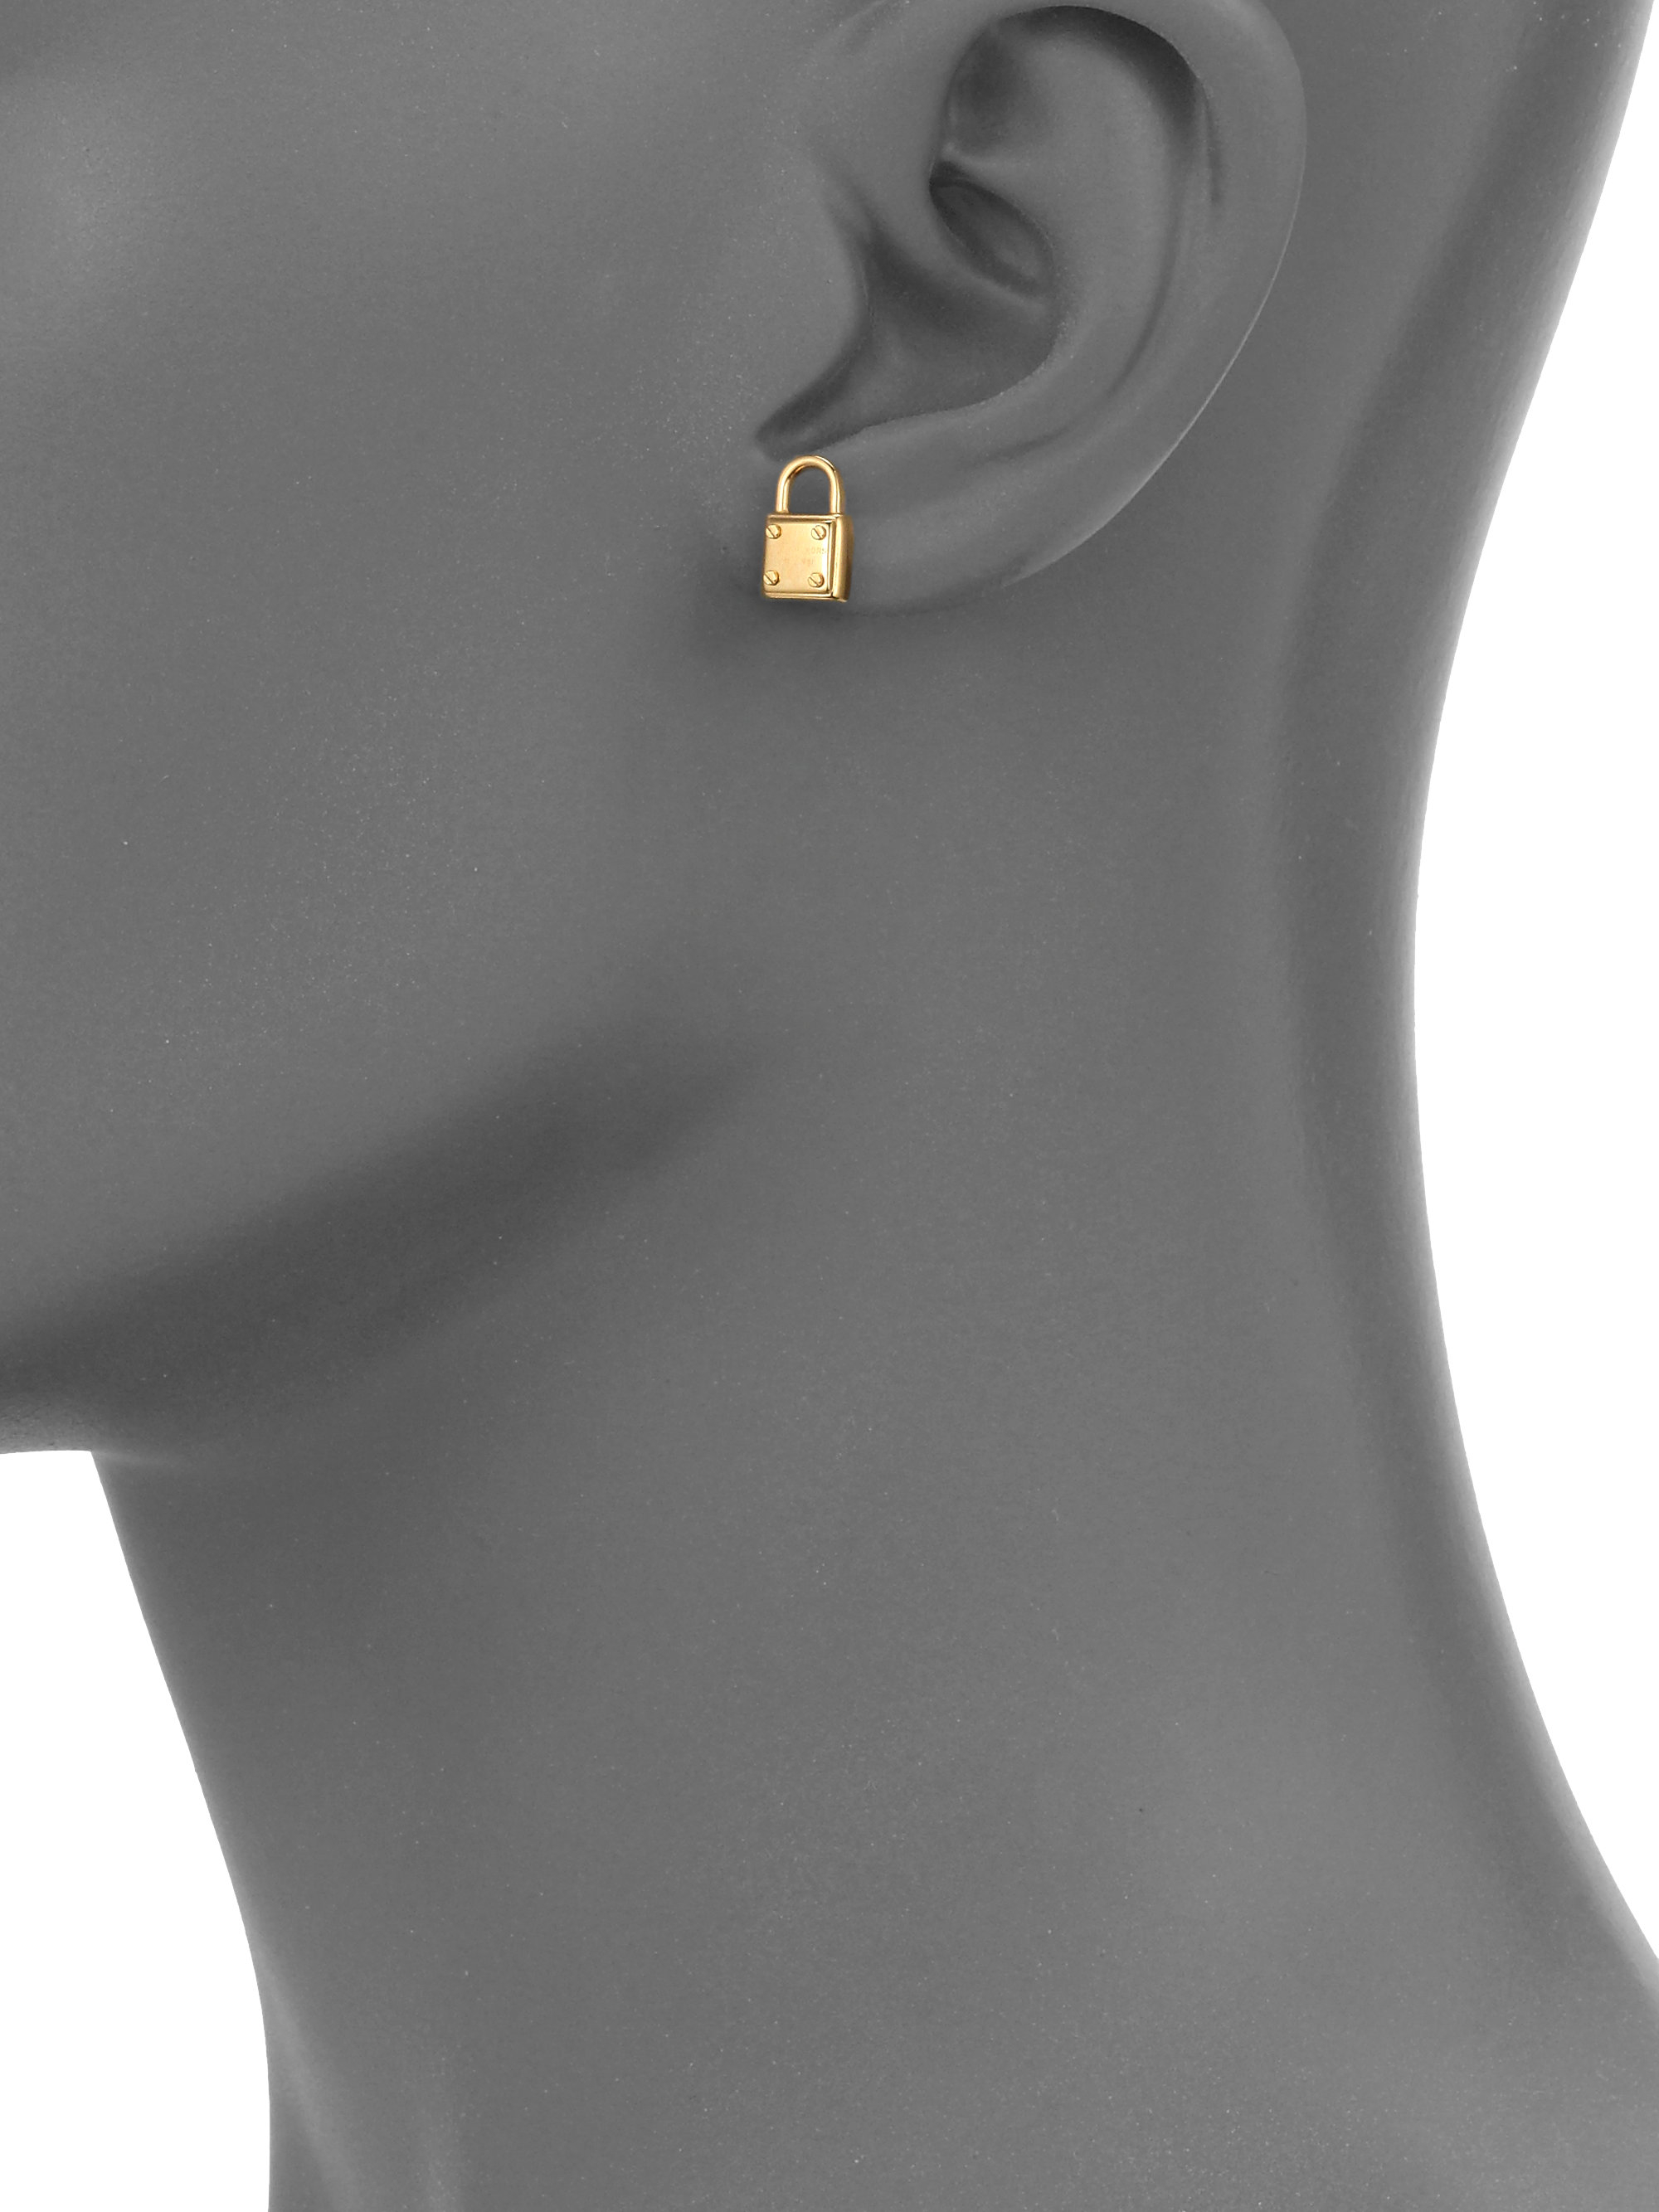 Michael Kors Padlock Logo Stud Earrings in Gold (Metallic) - Lyst